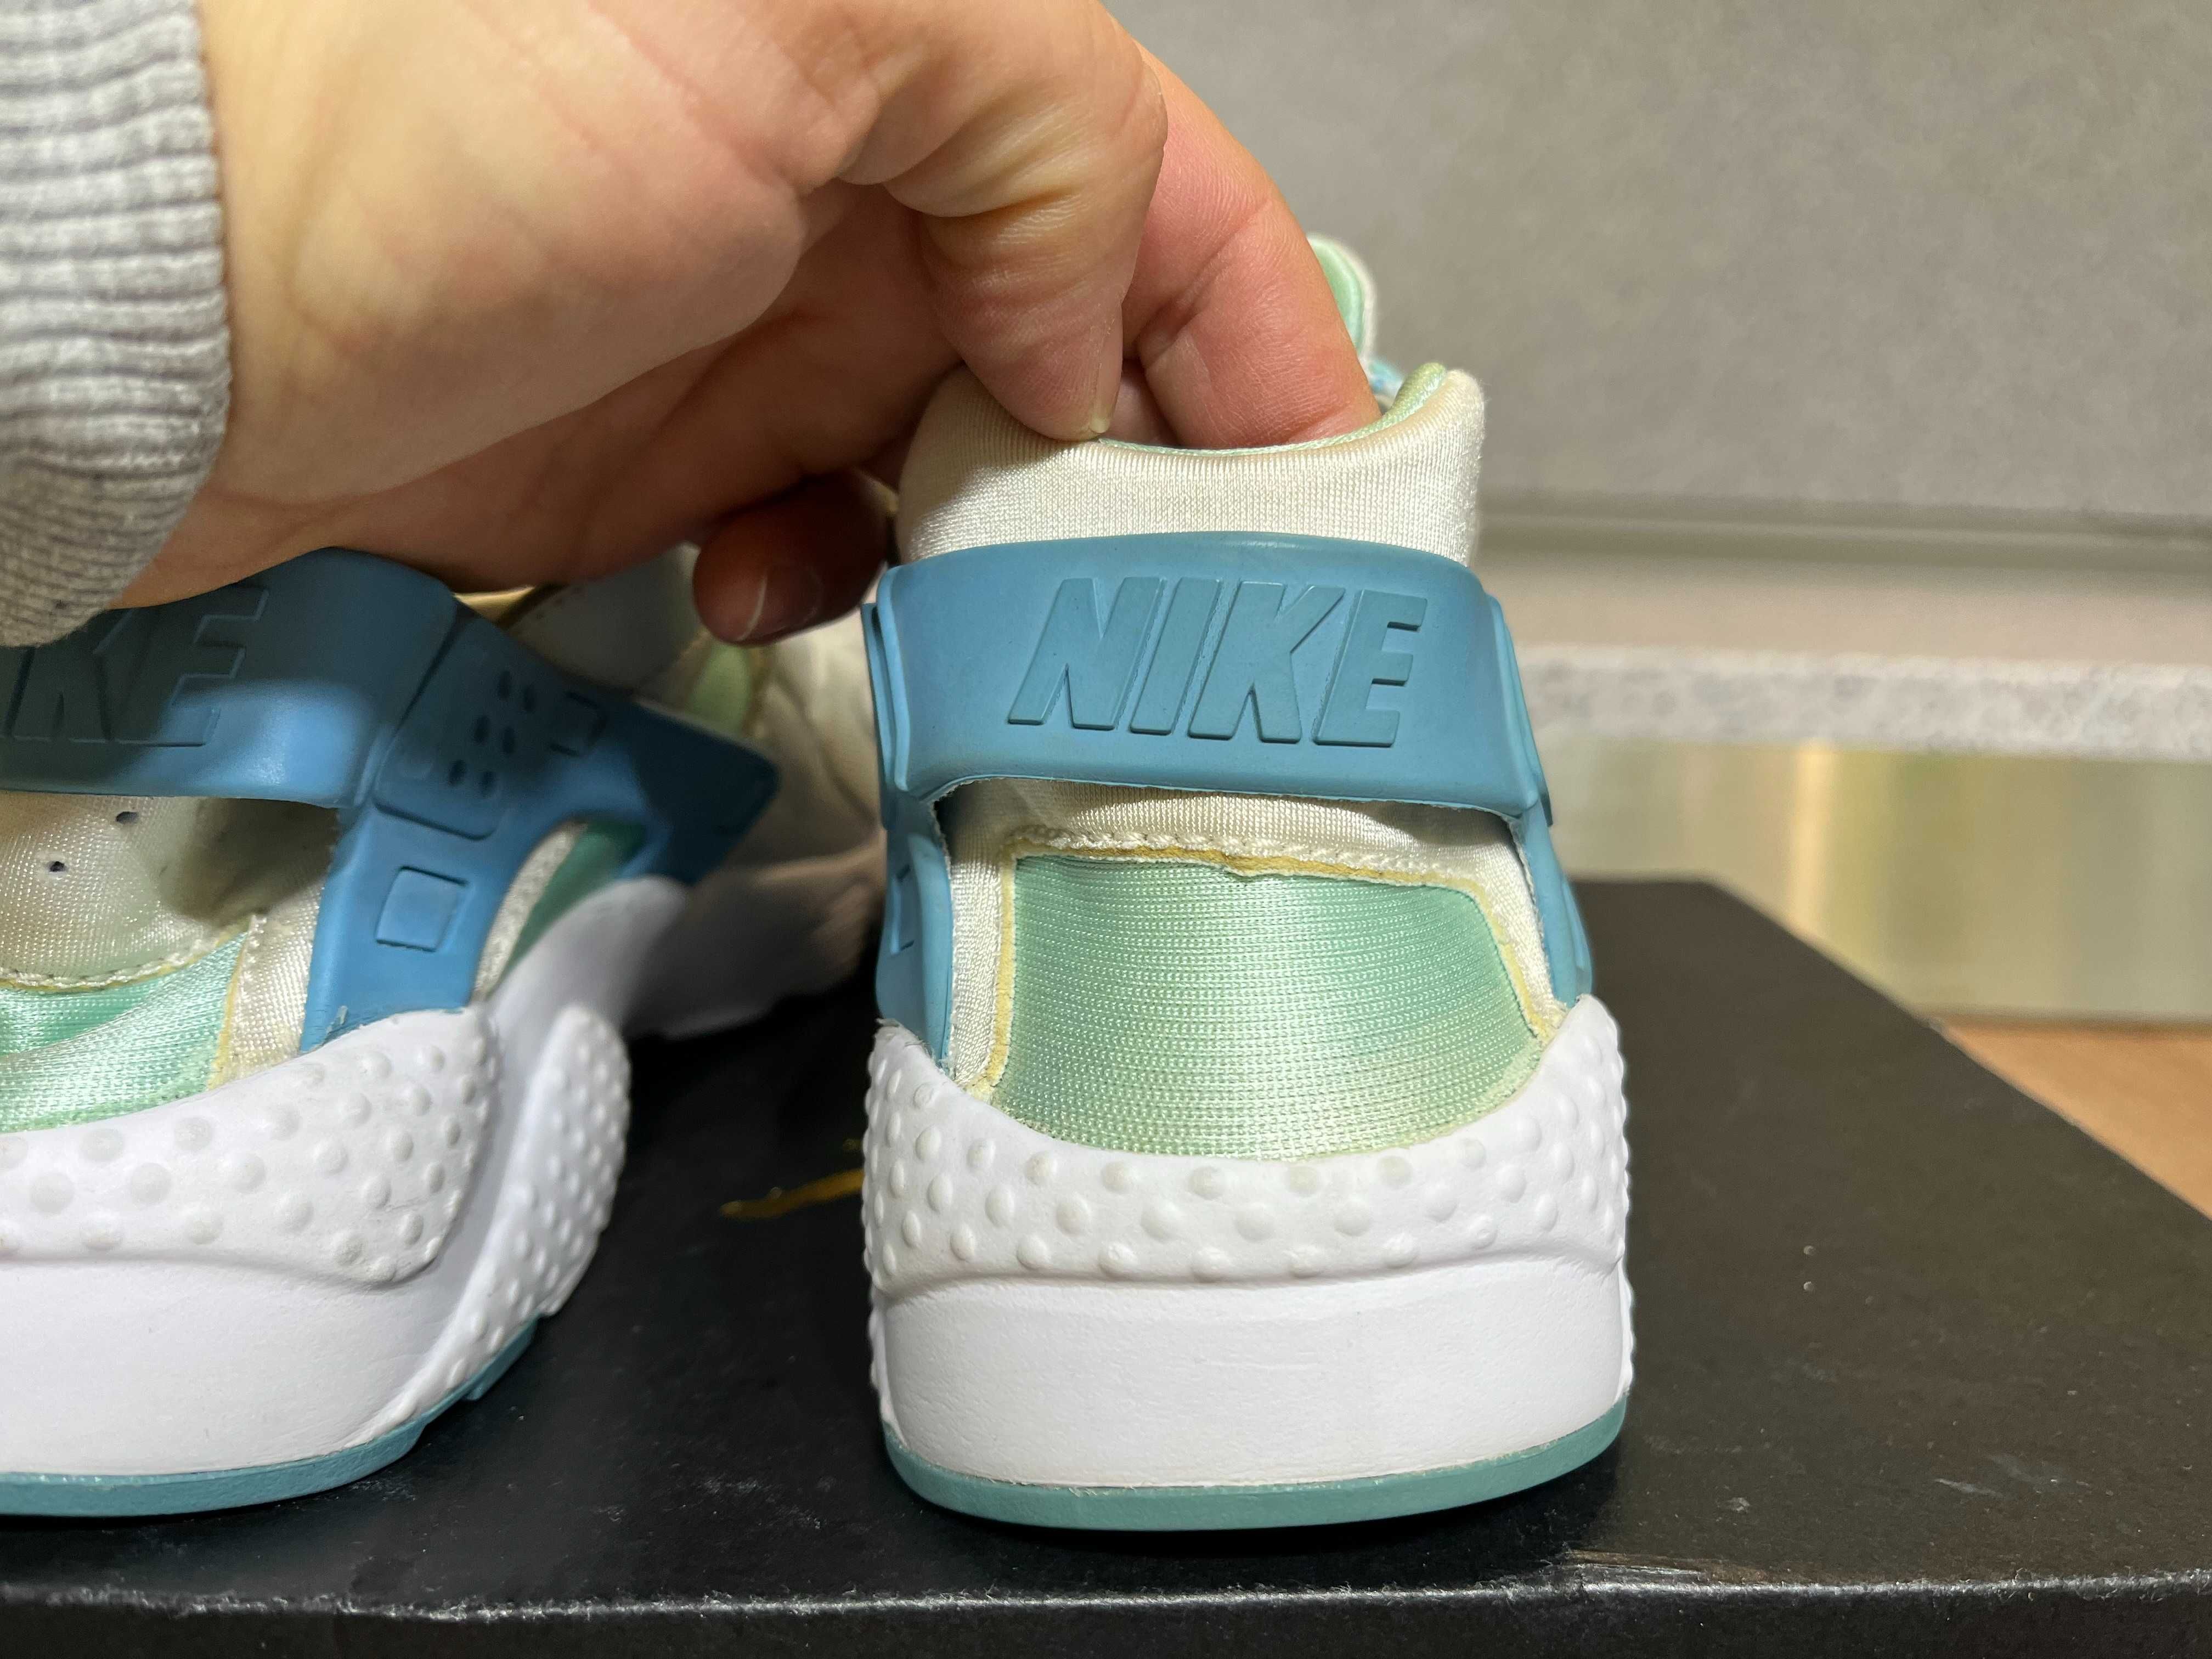 ОРИГИНАЛНИ *** Nike Air Huarache Run / Grey Silver Blue White